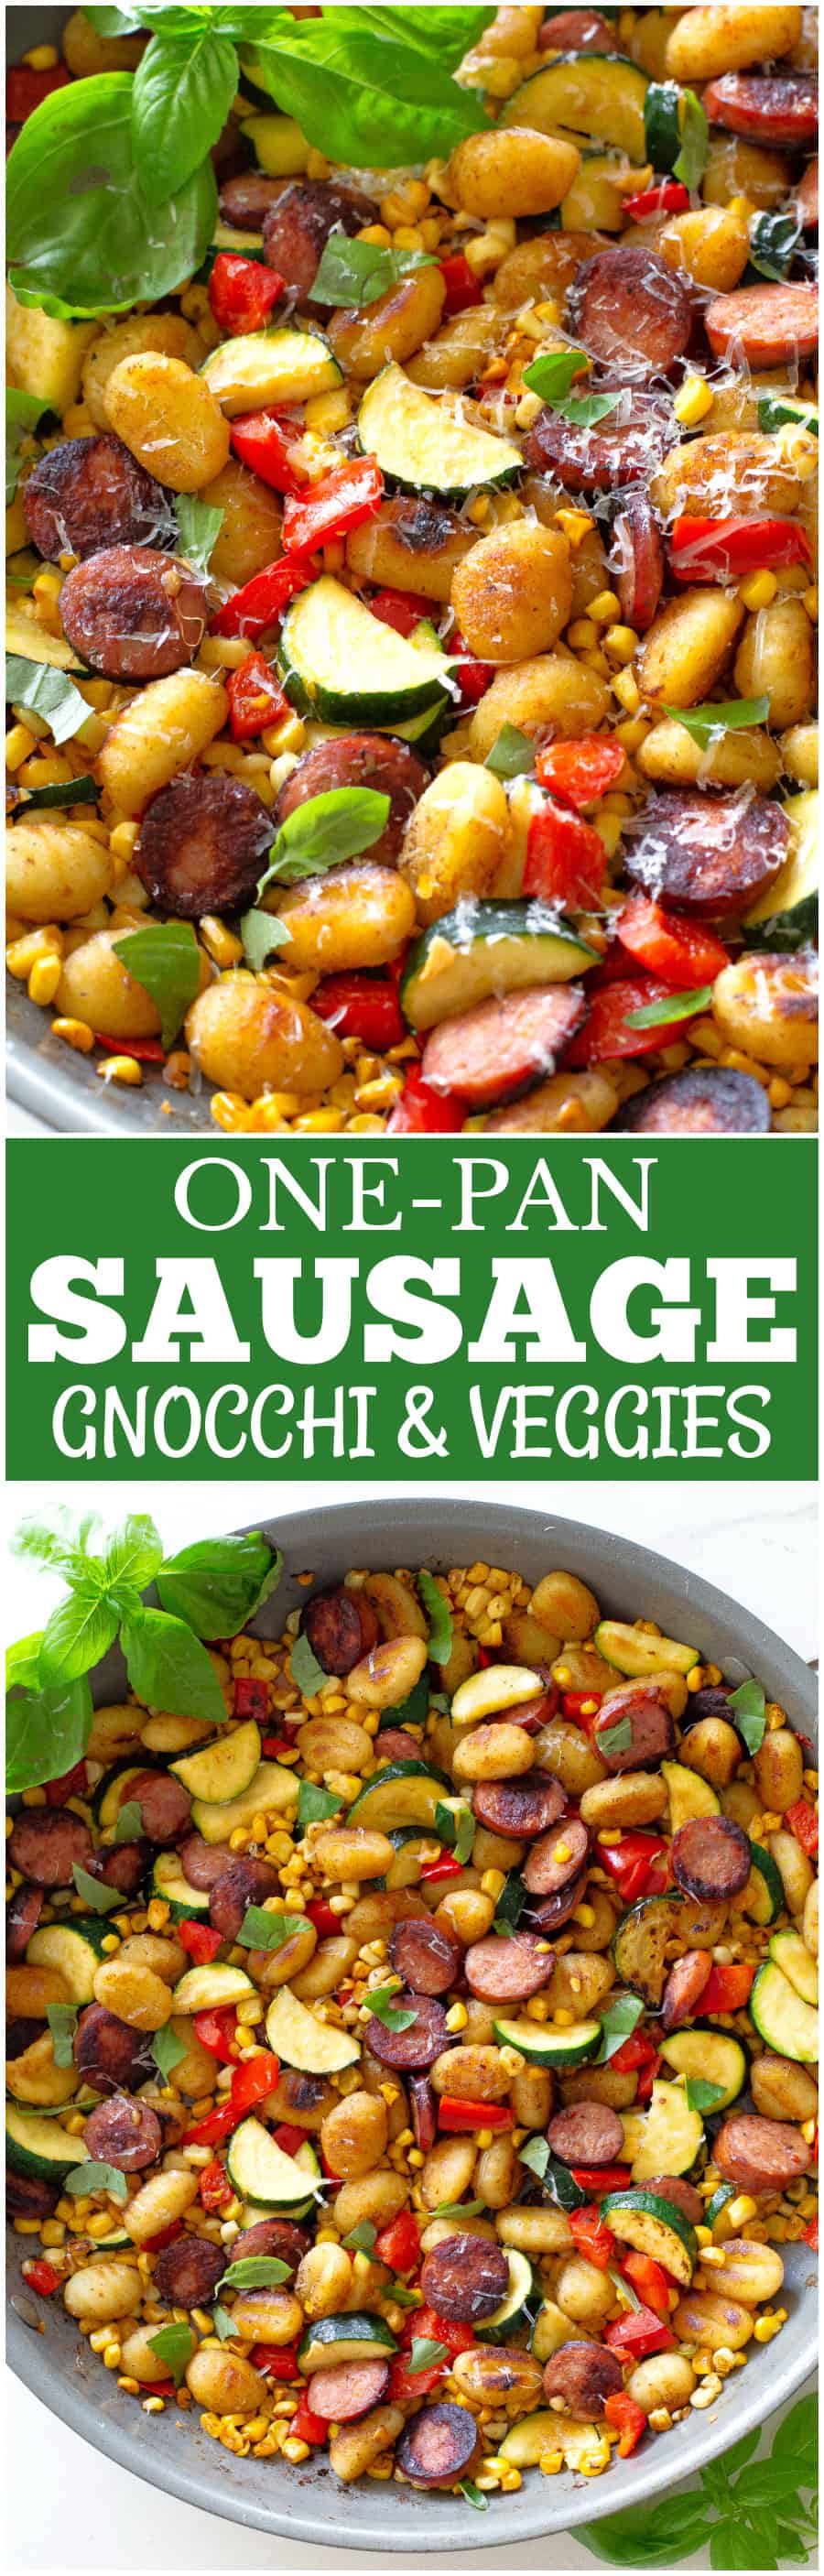 One-Pan Sausage Gnocchi and Veggies 